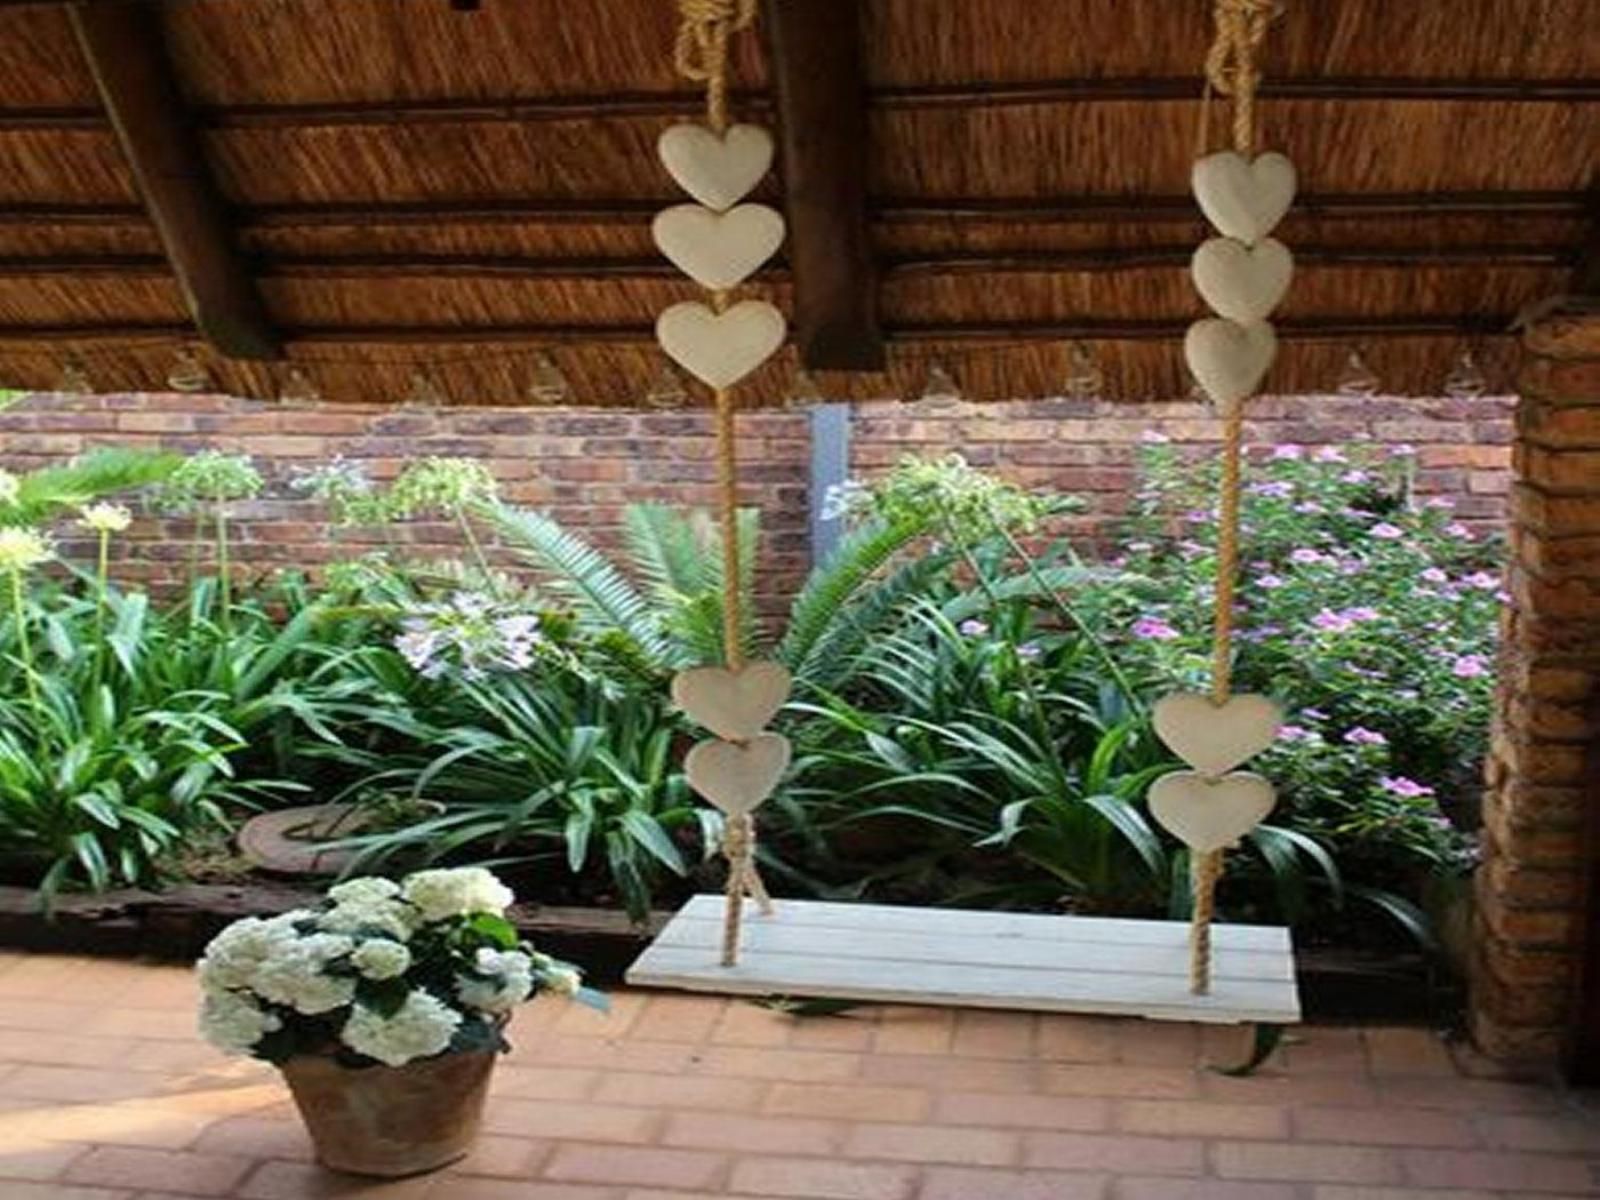 Home In The East Garsfontein Pretoria Tshwane Gauteng South Africa Plant, Nature, Garden